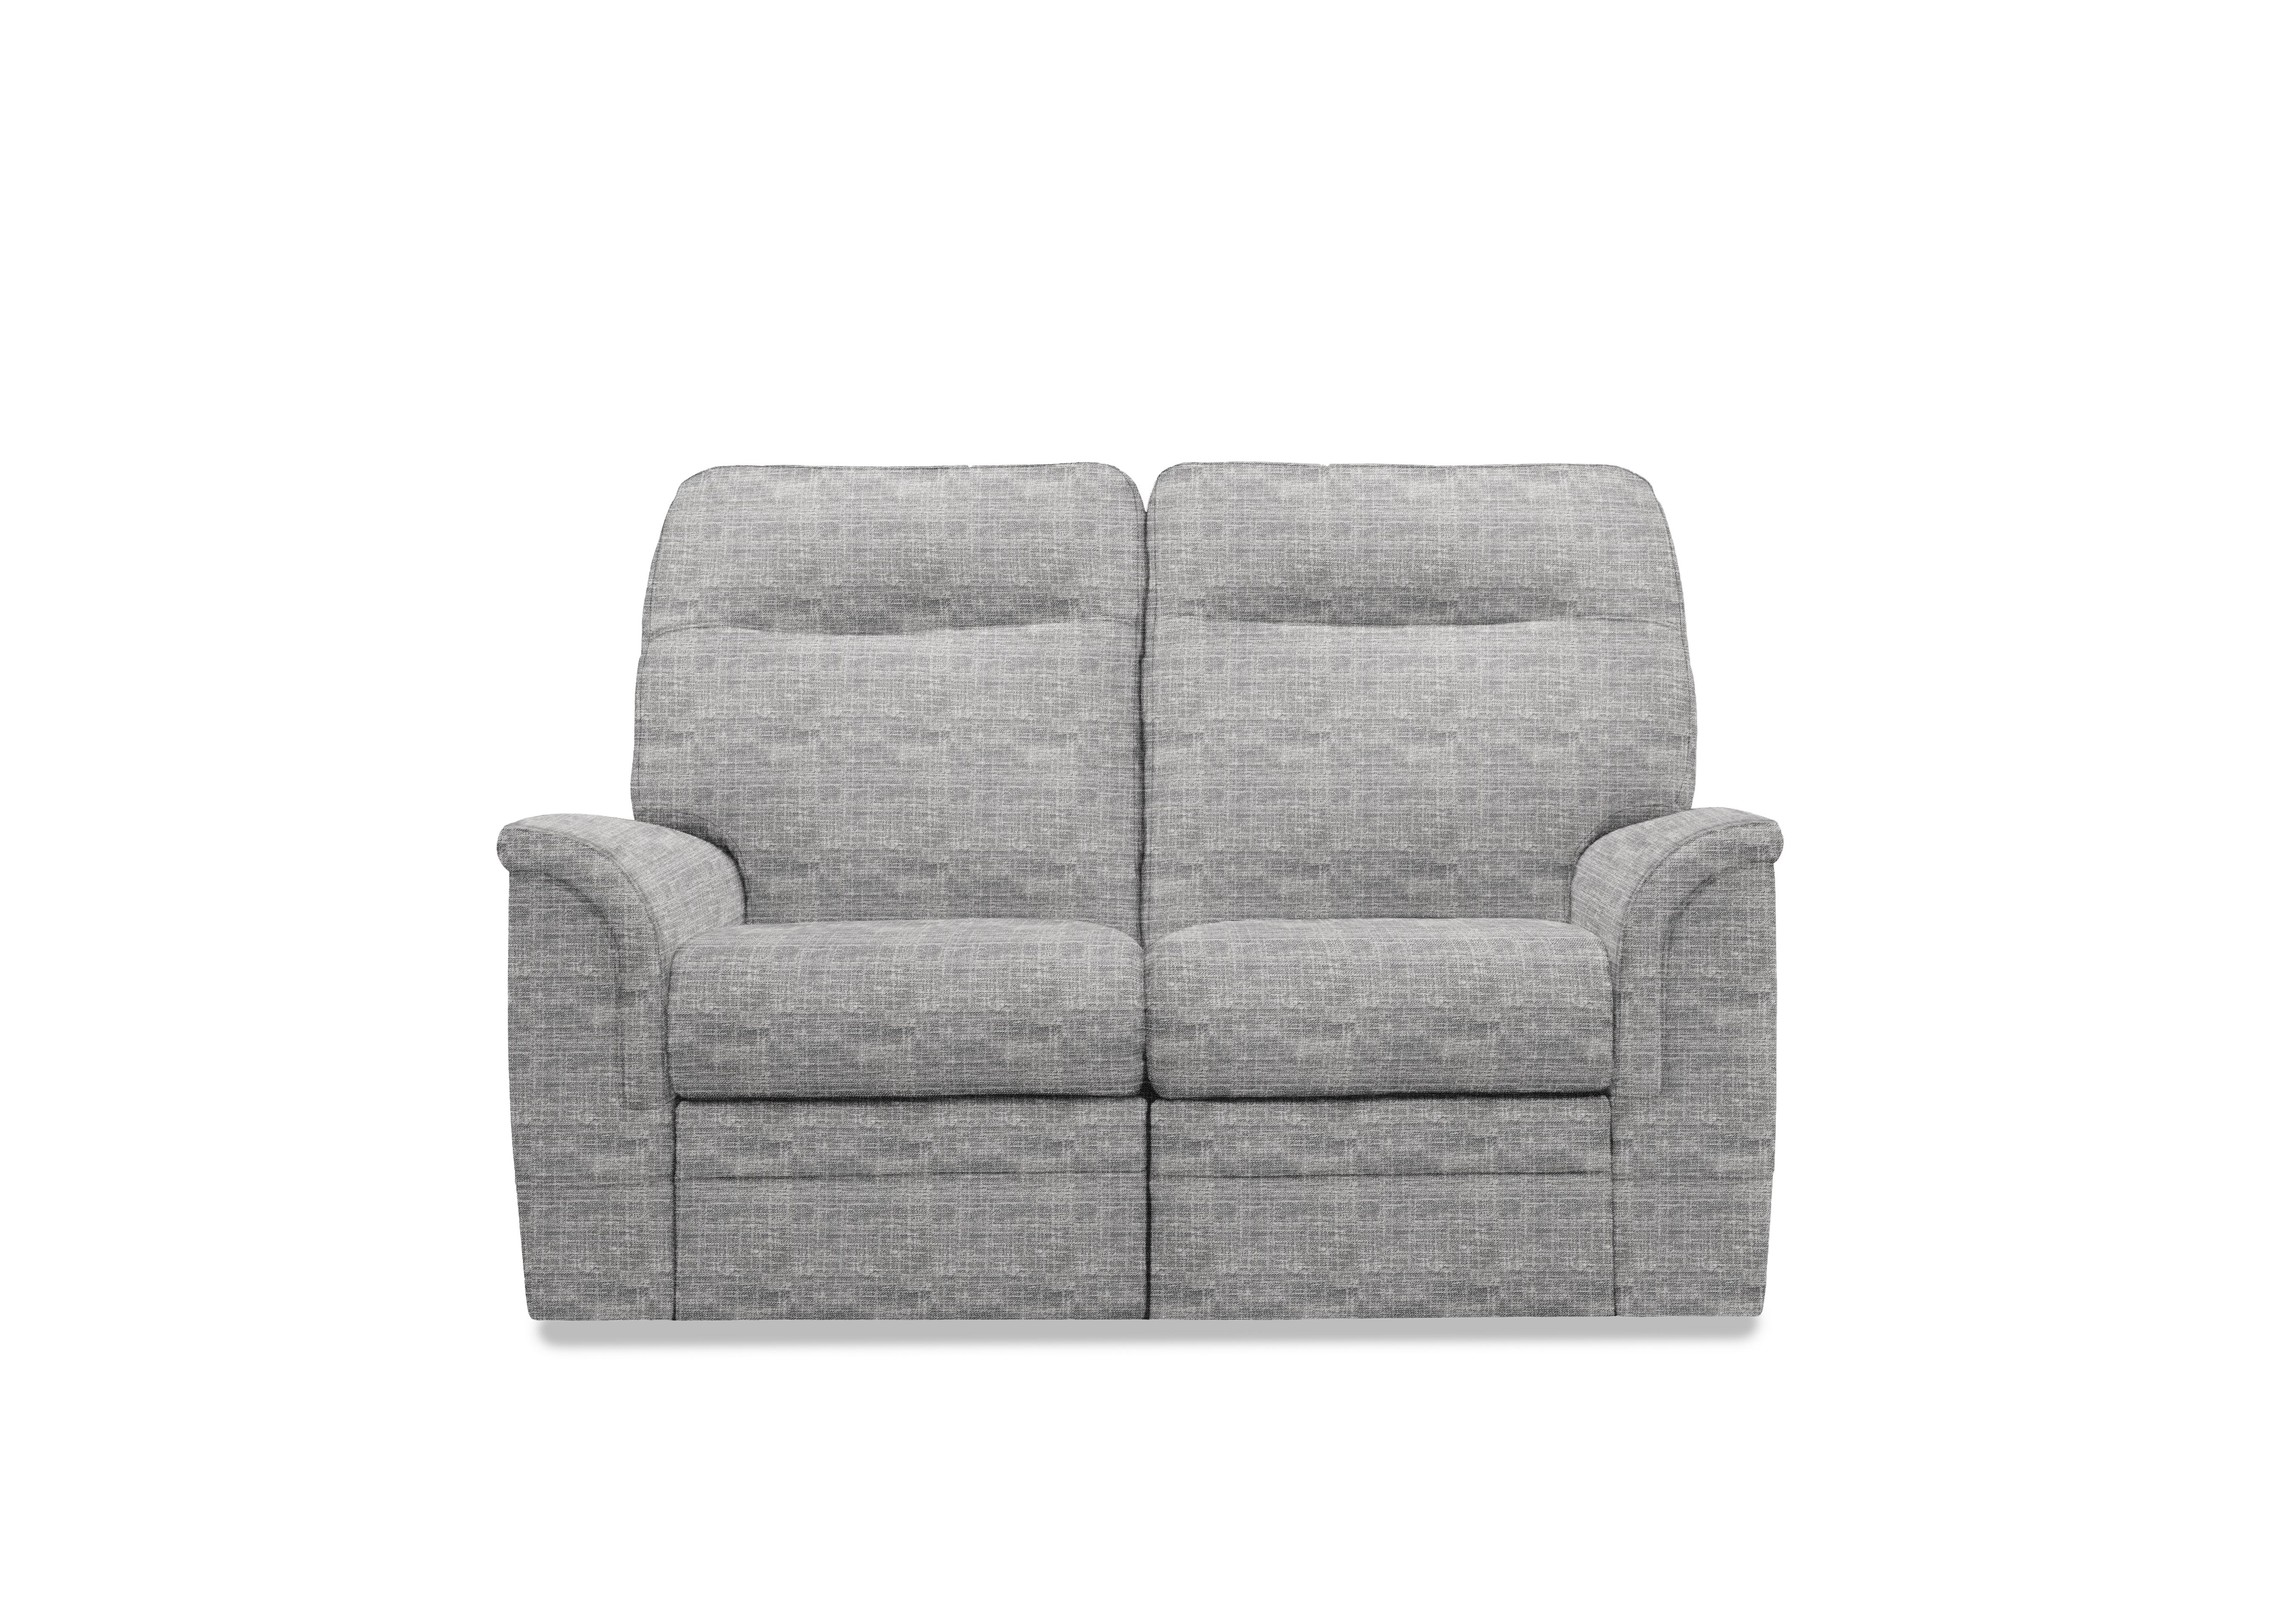 Hudson 23 Fabric 2 Seater Sofa in Dash Stone  001497-0040 on Furniture Village